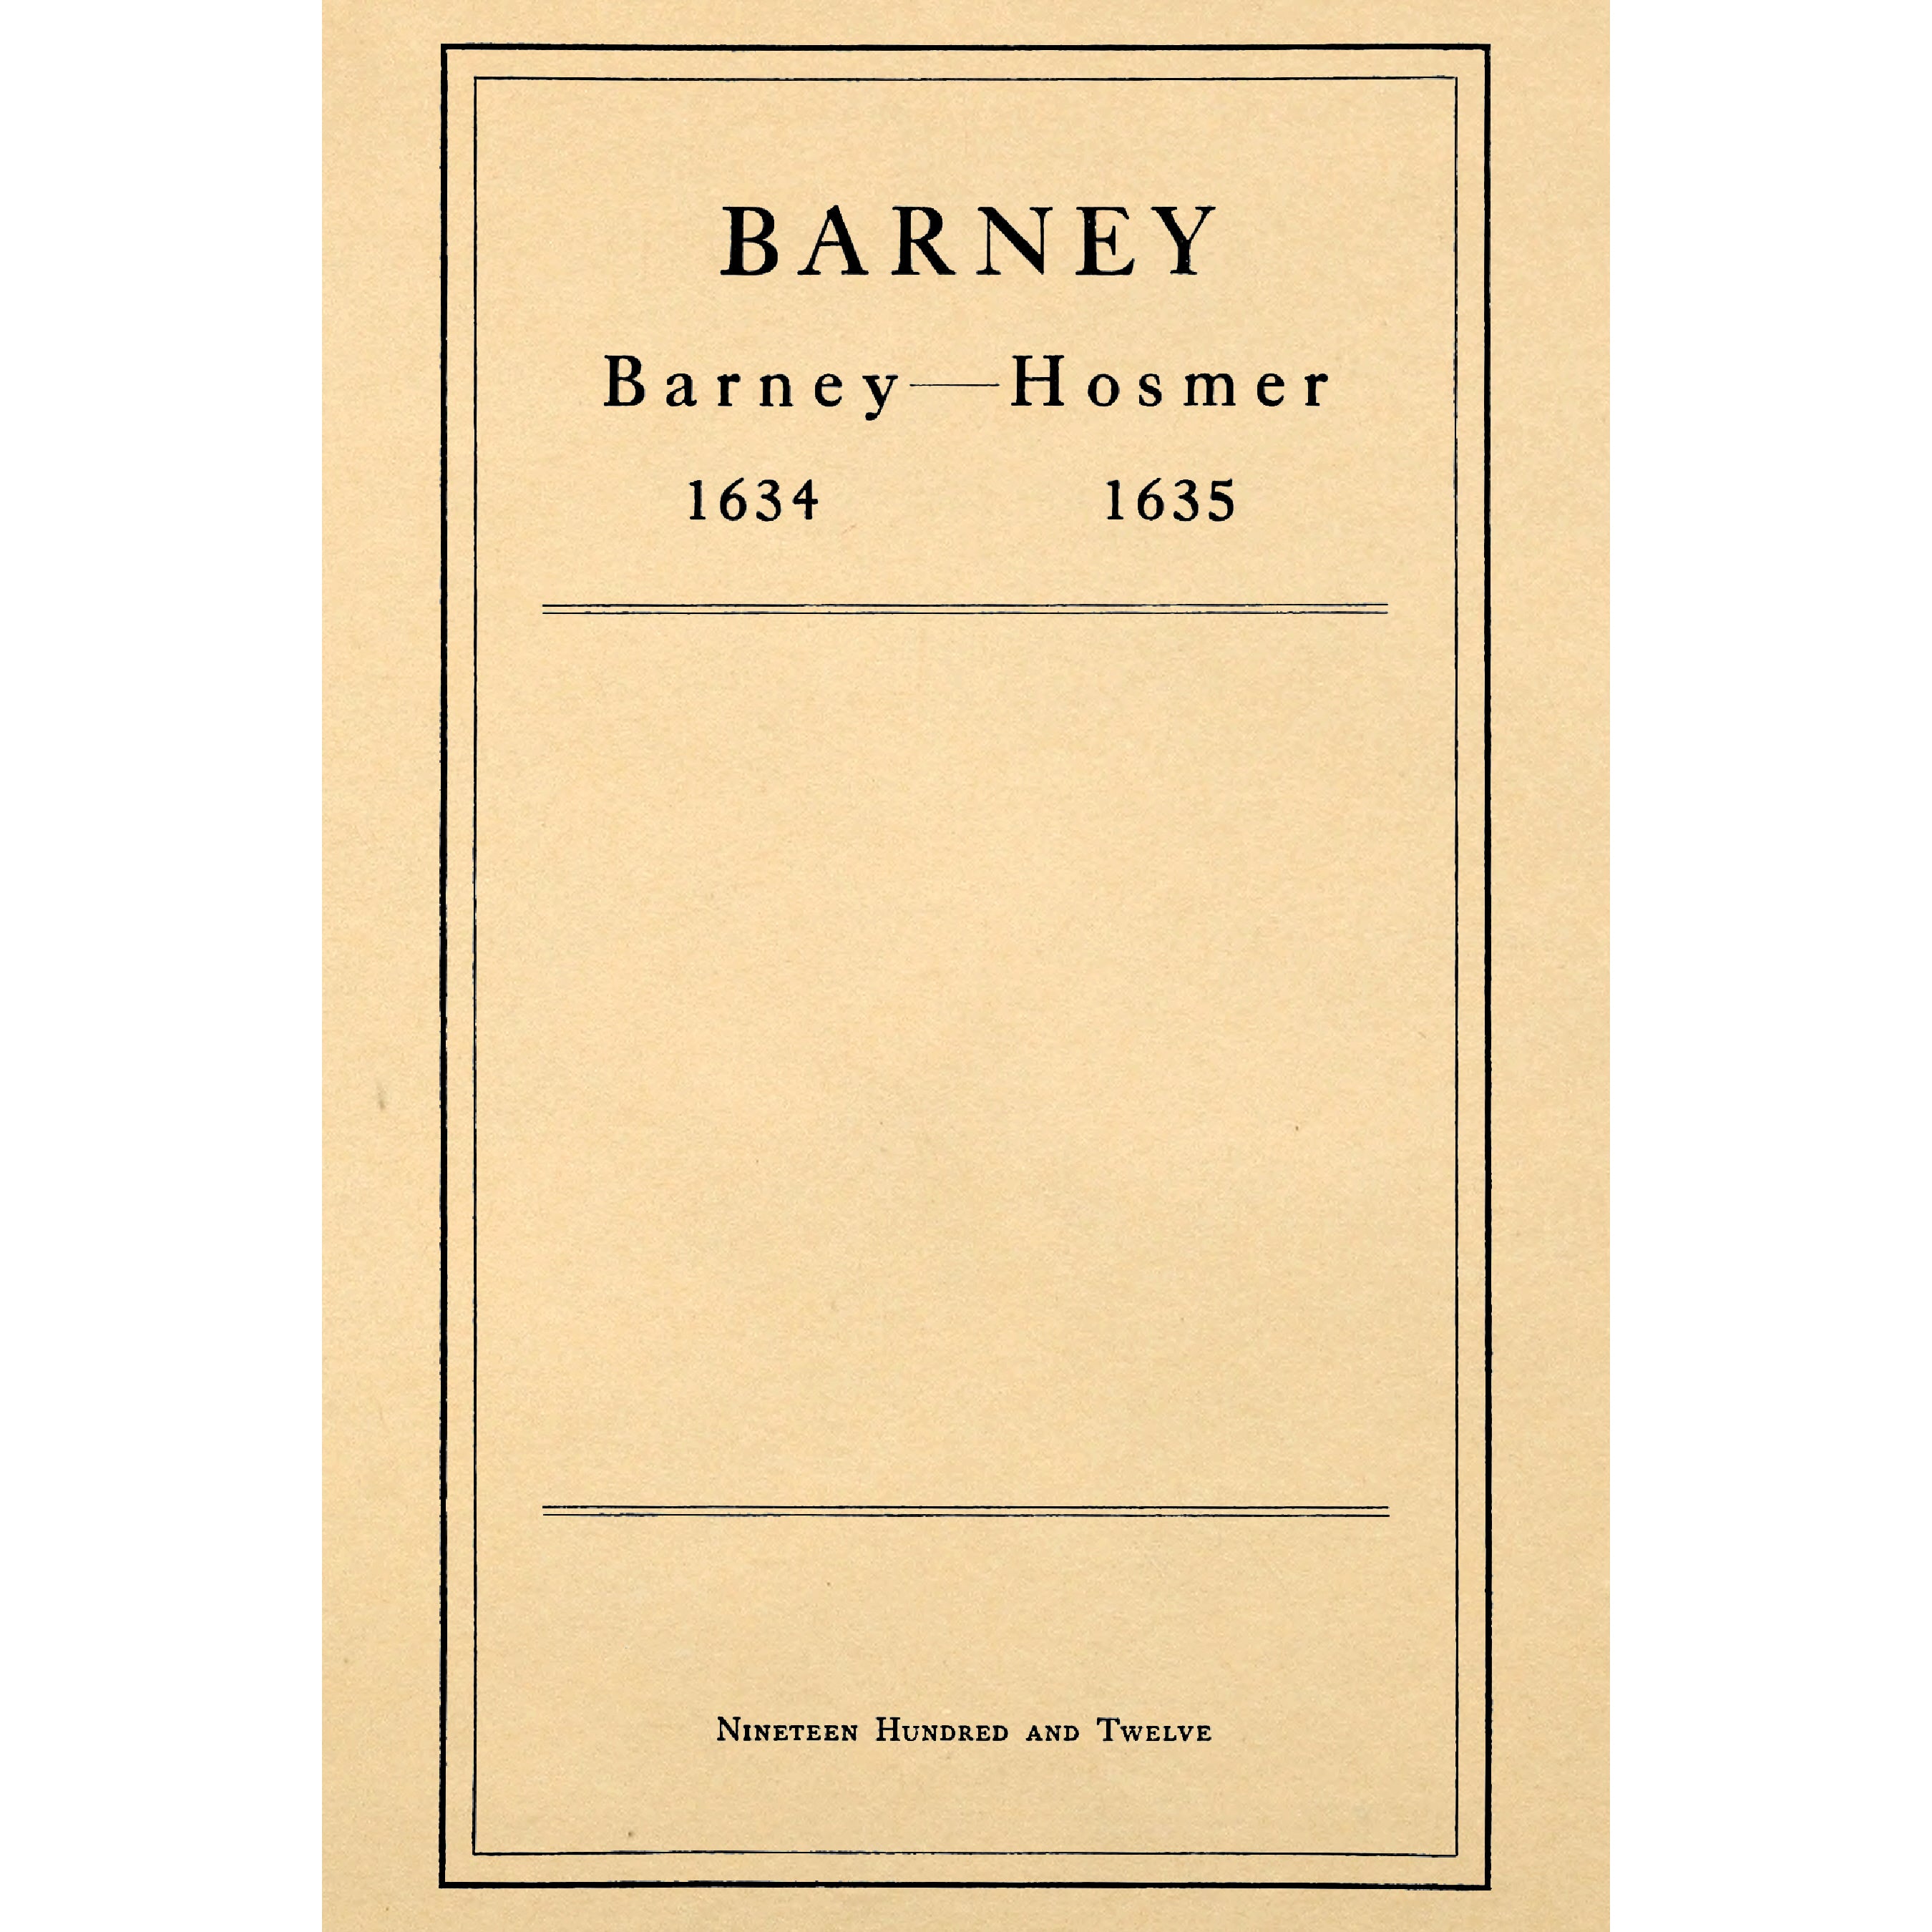 Barney, Barney(1634) - Hosmer (1635)